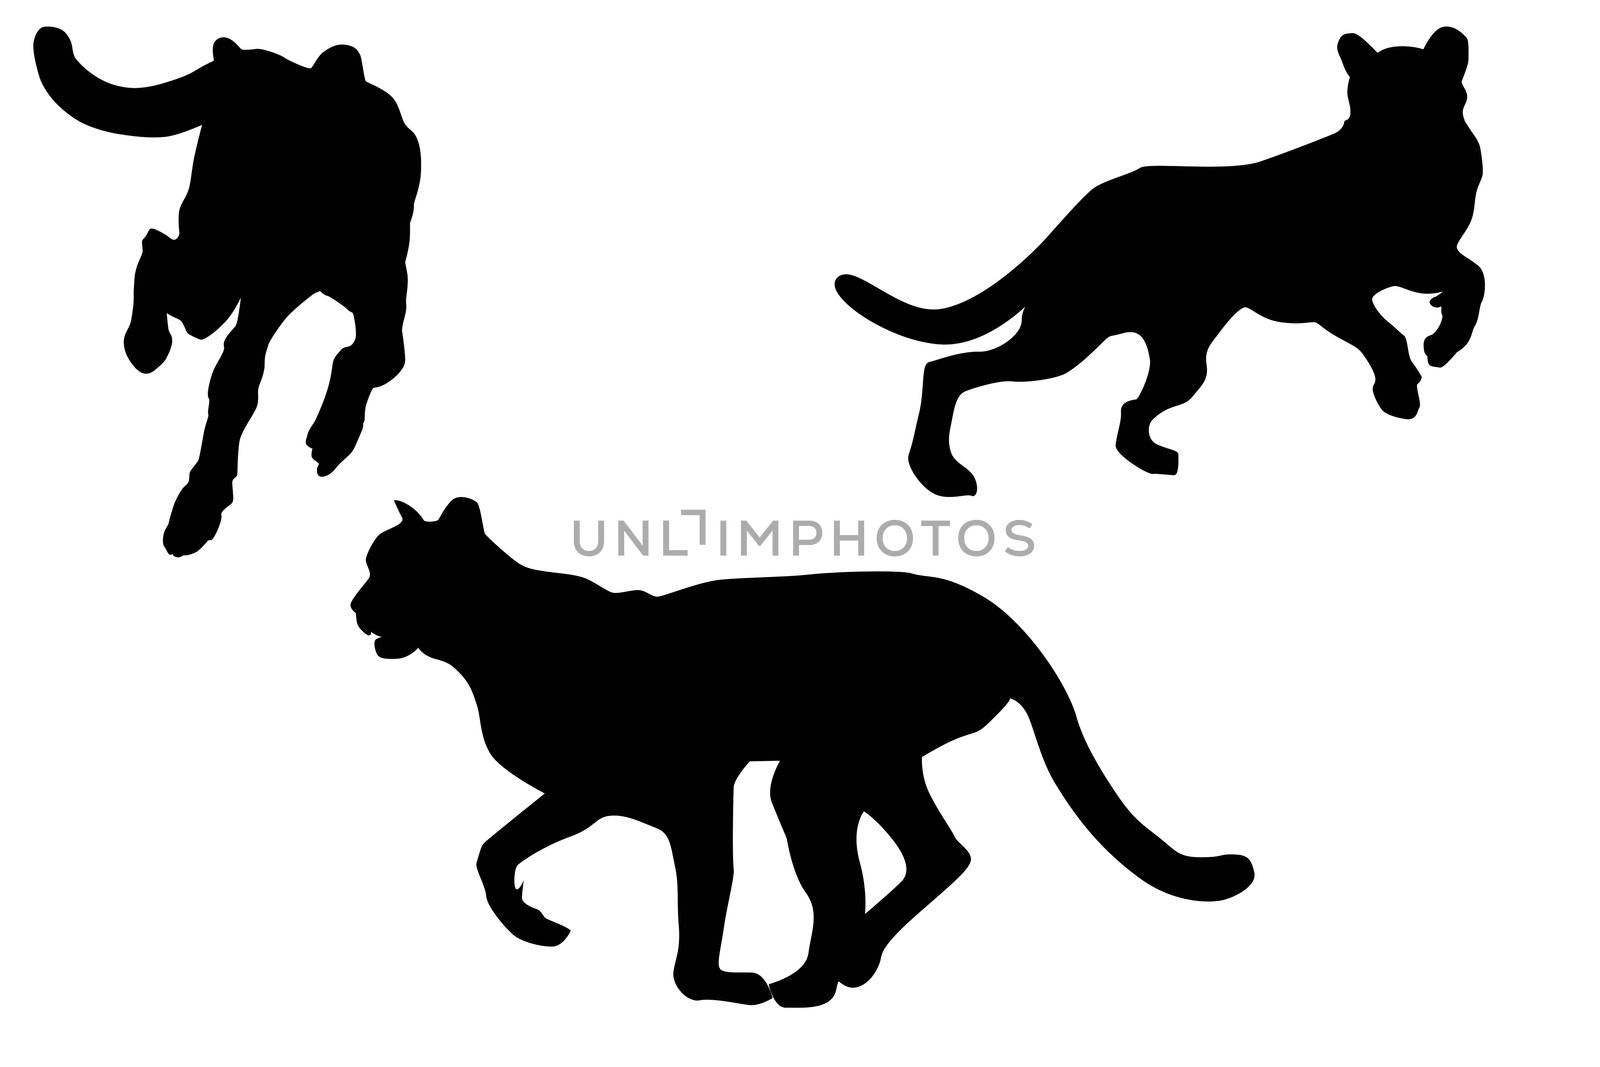 Cheetah silhouettes with cliping path by cristiaciobanu